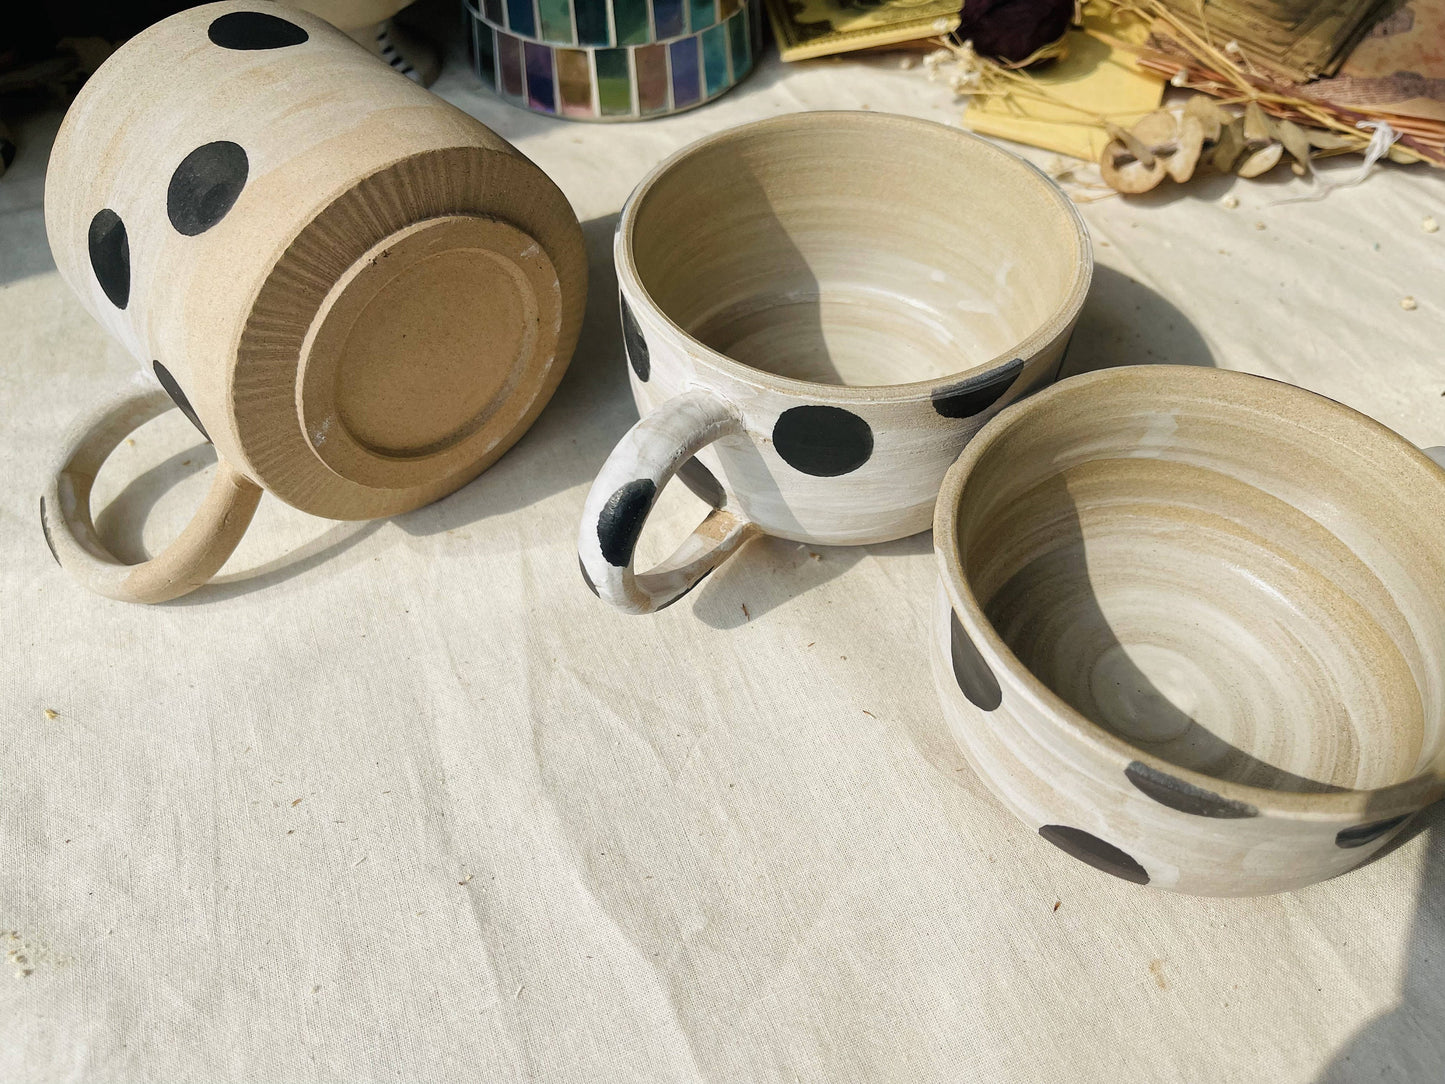 Ceramic Coffee Mug Handmade, Wave Point Personalized Pottery Mug